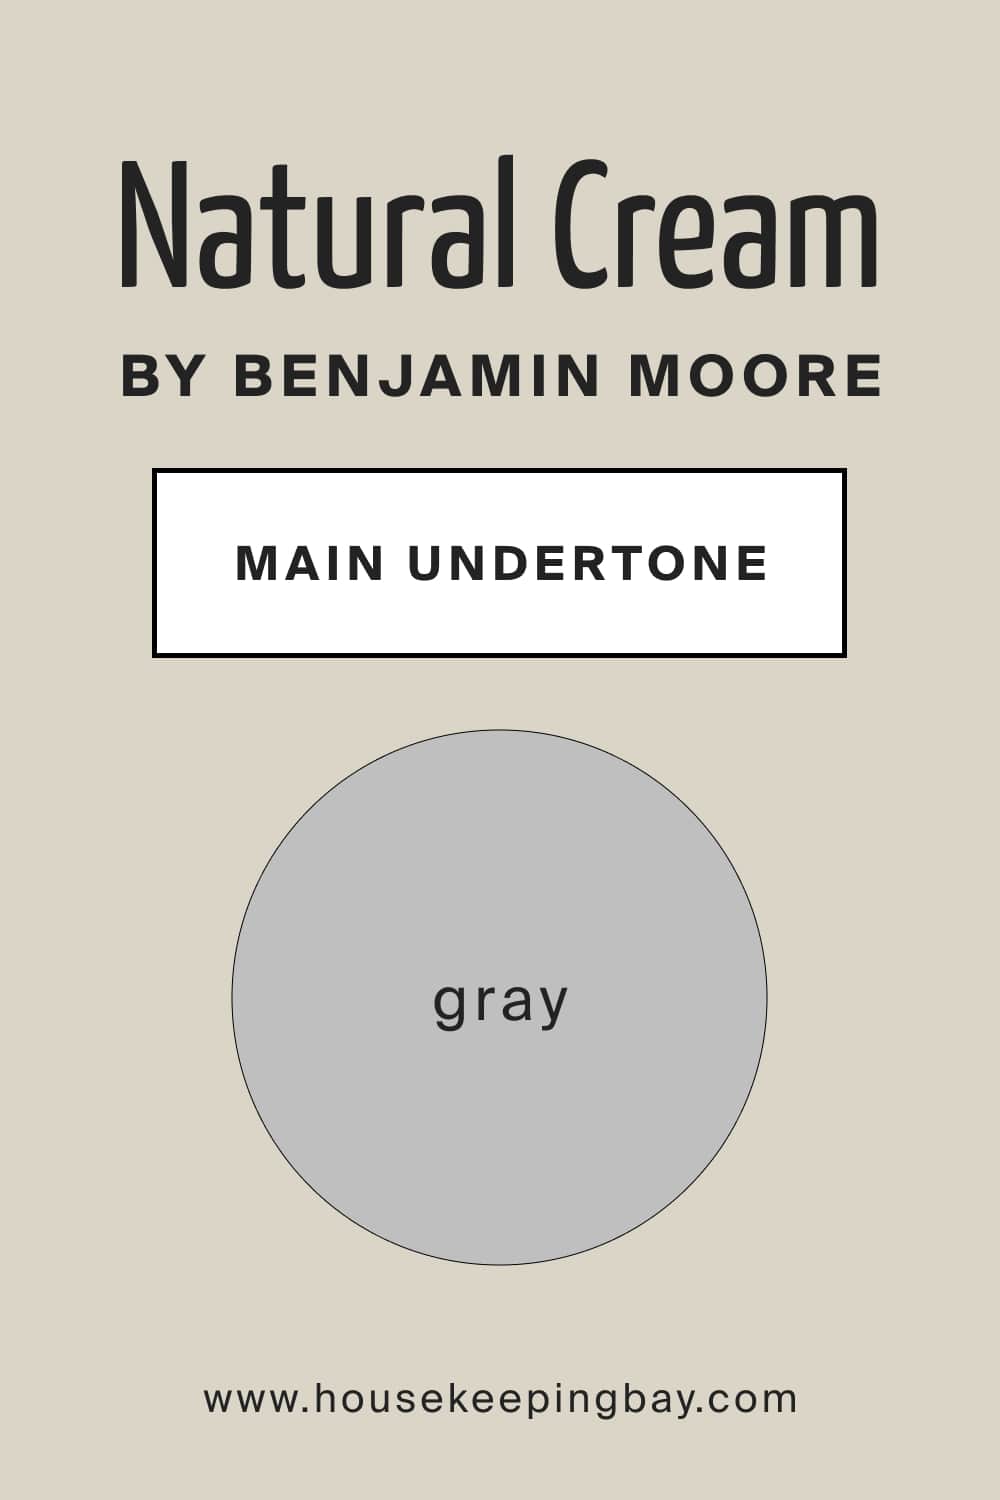 Natural Cream OC 14 by Sherwin Williams Color Undertones